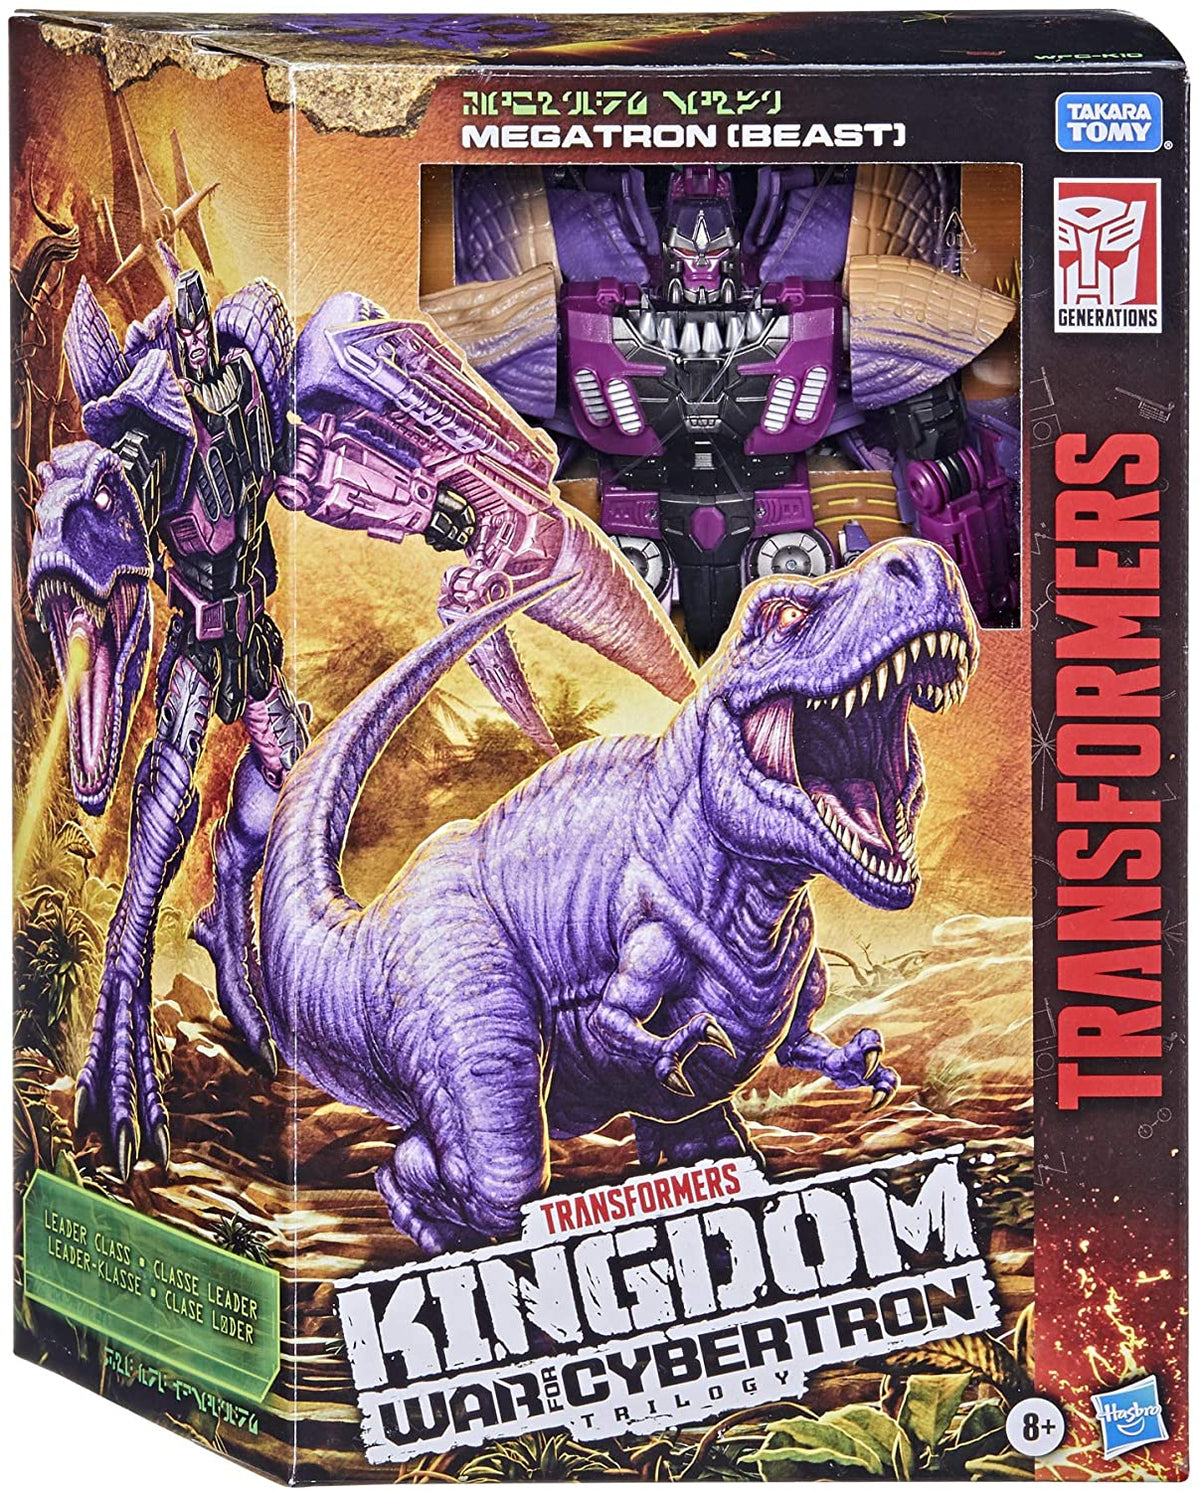 Transformers Toys Generations War for Cybertron: Kingdom Leader WFC-K10 Megatron (Beast) Action Figure